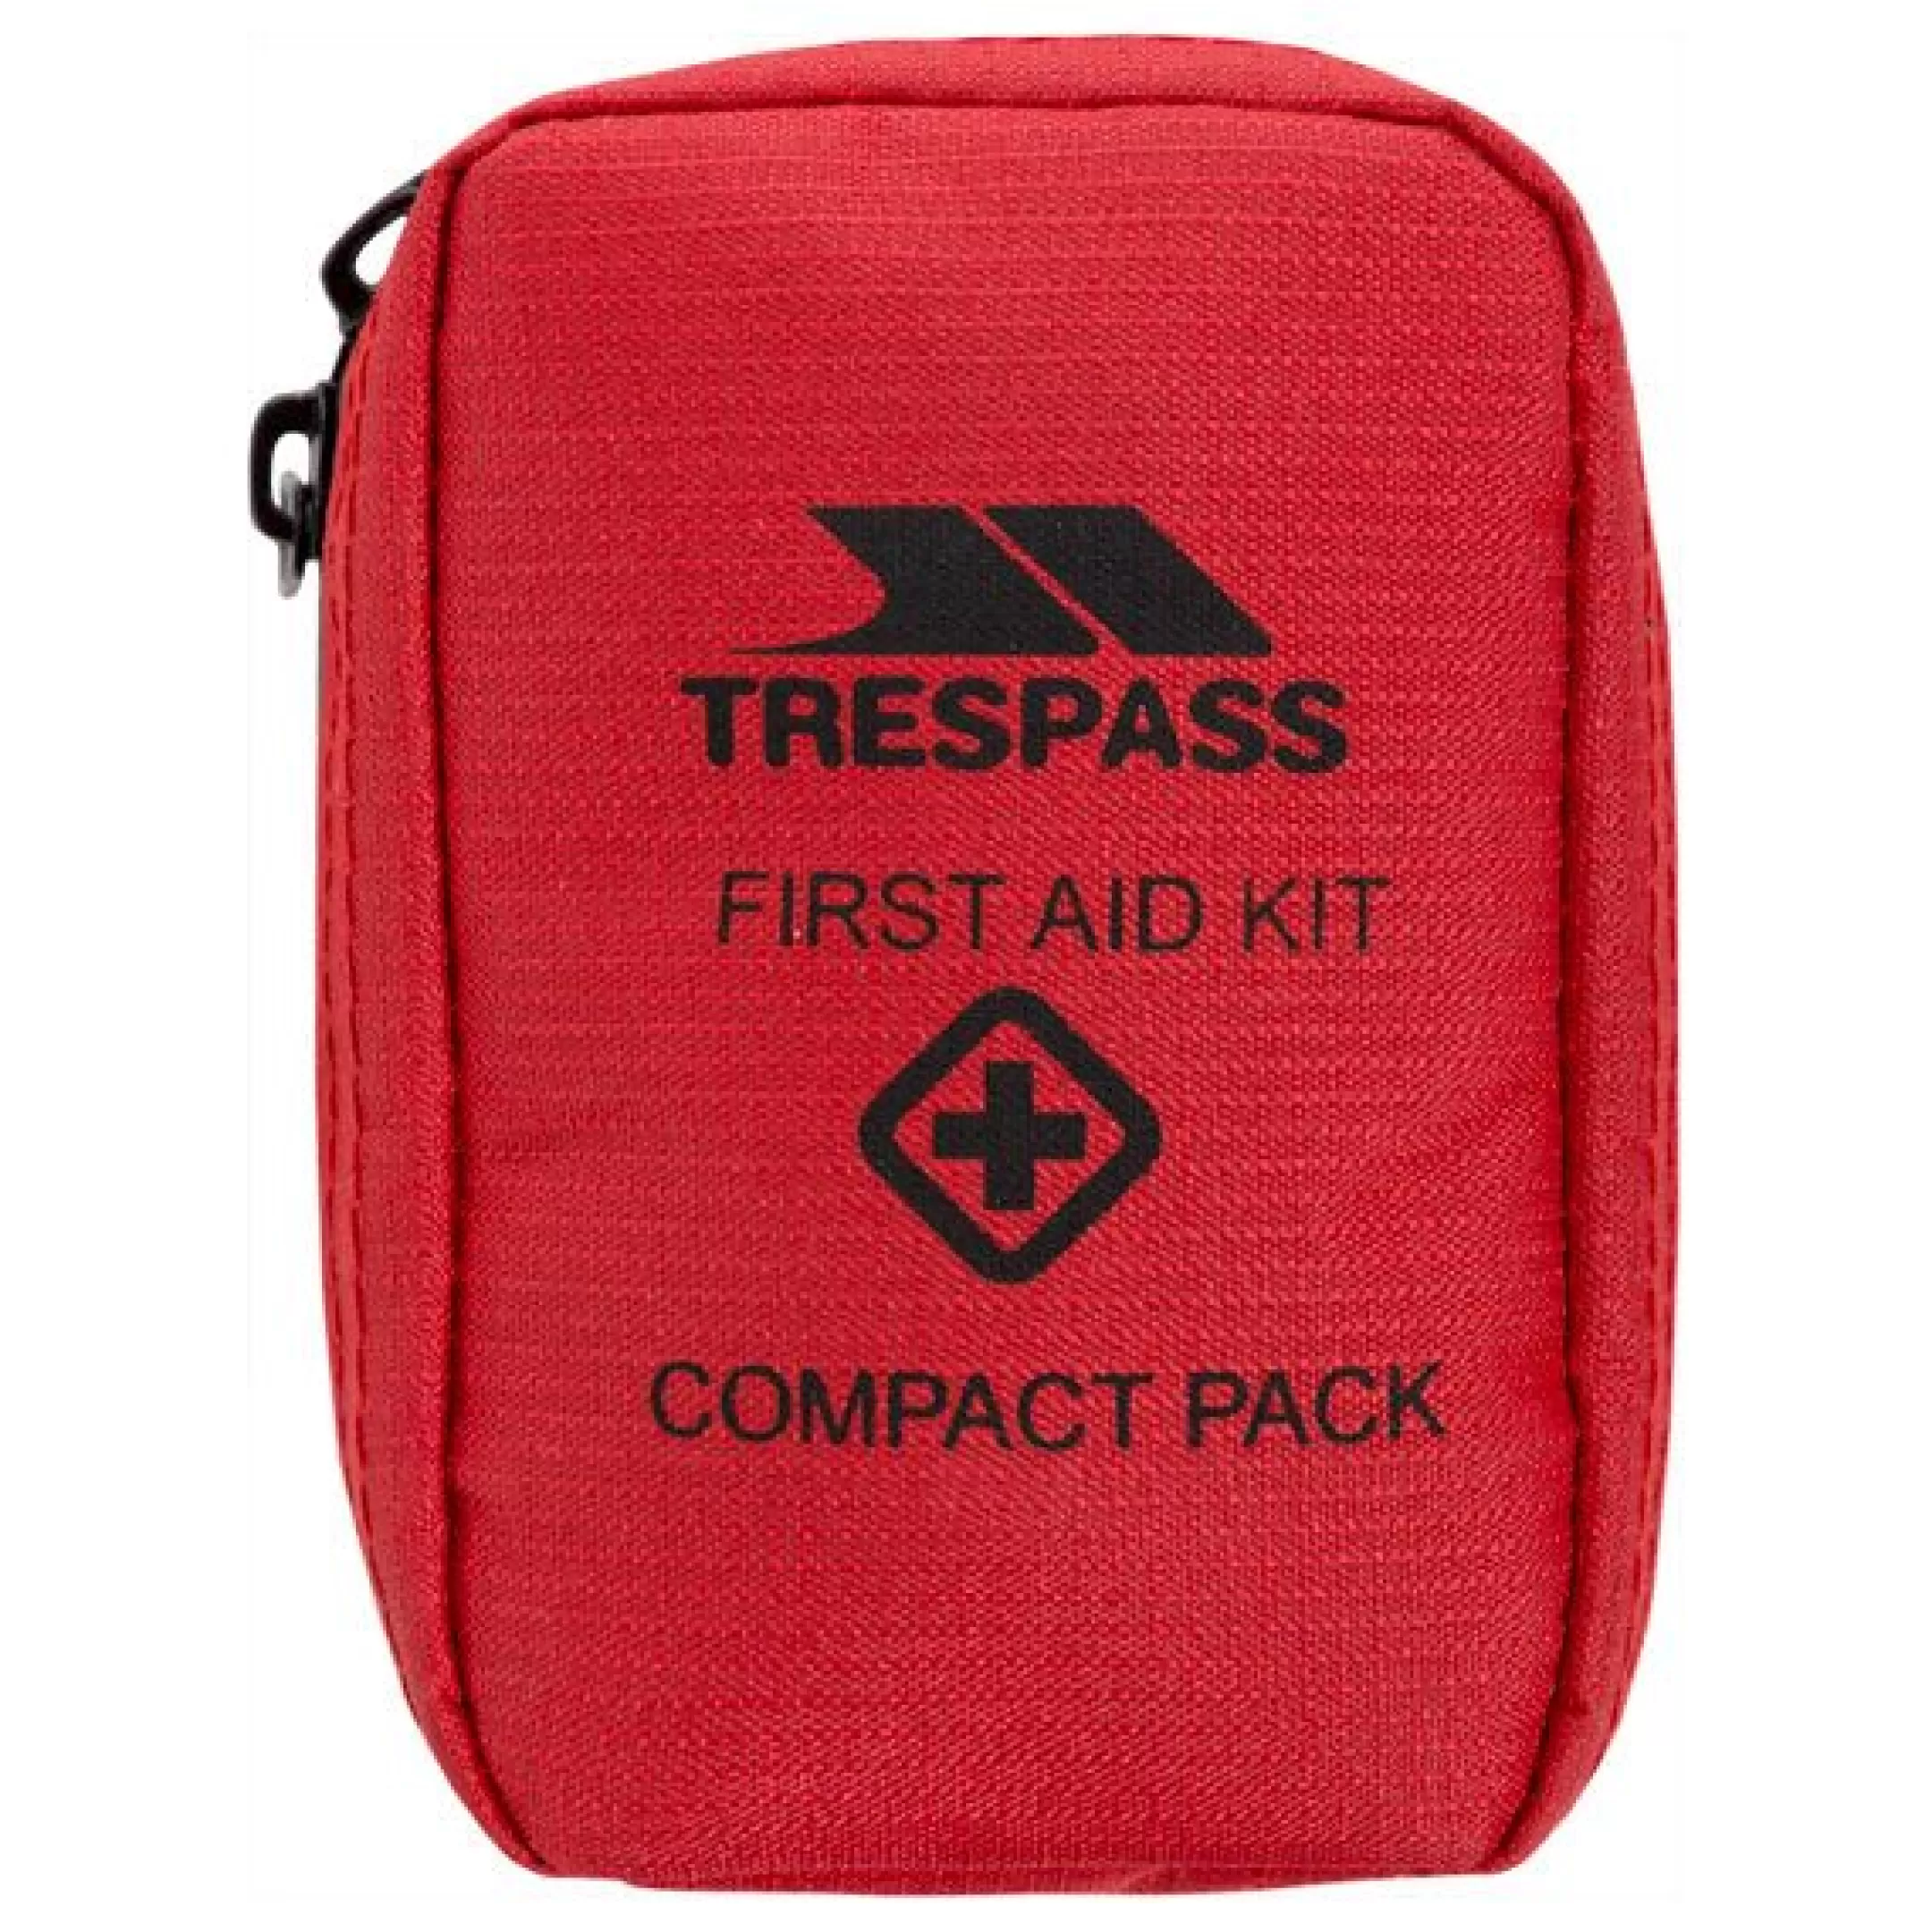 Mini First Aid Kit Travel Compact Pocket | Trespass Cheap